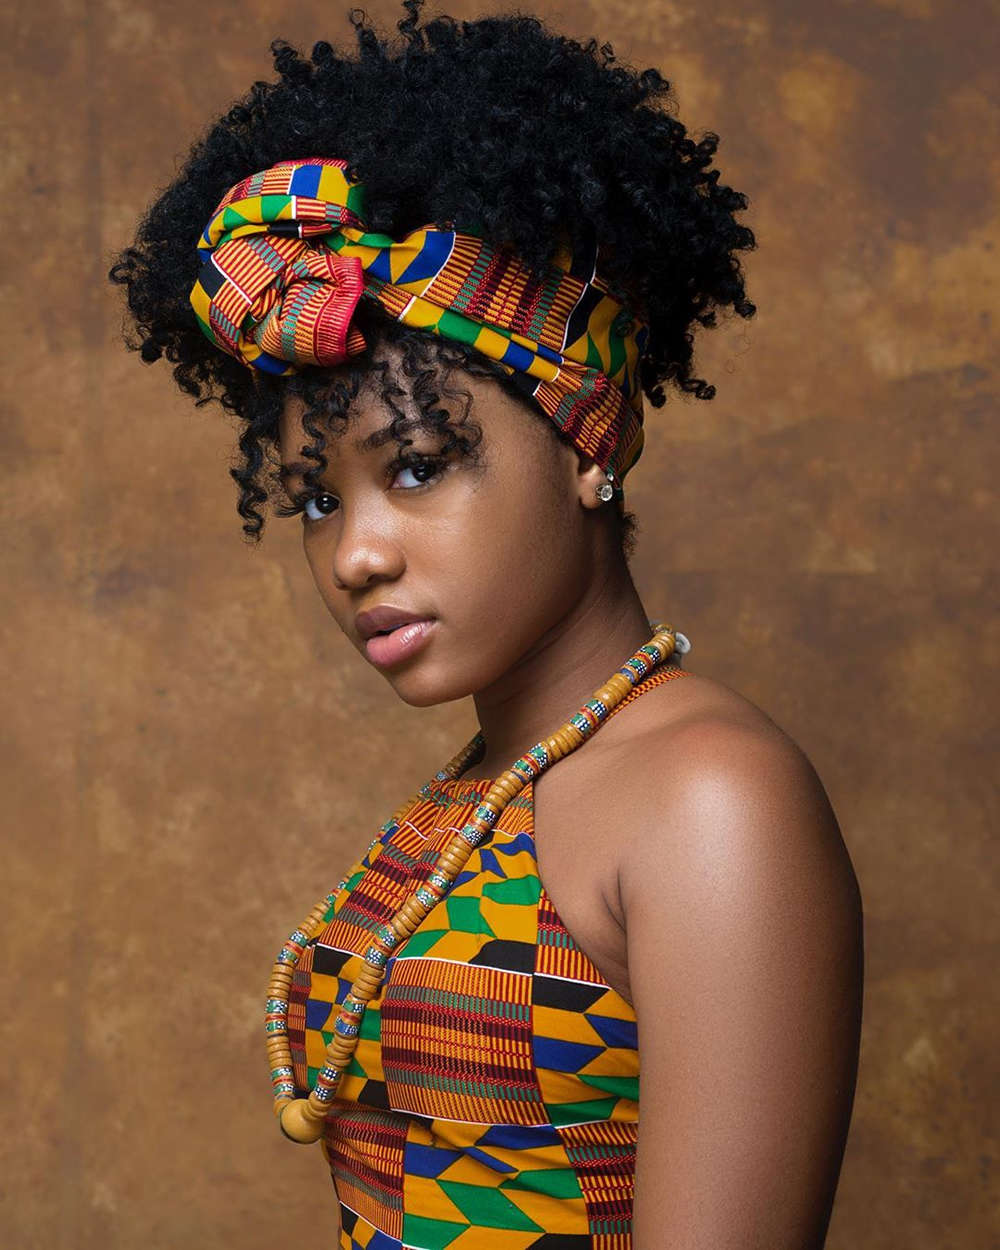 Hot Shots Of Two African Beauties In Kente Prints Fashion – Classic Ghana